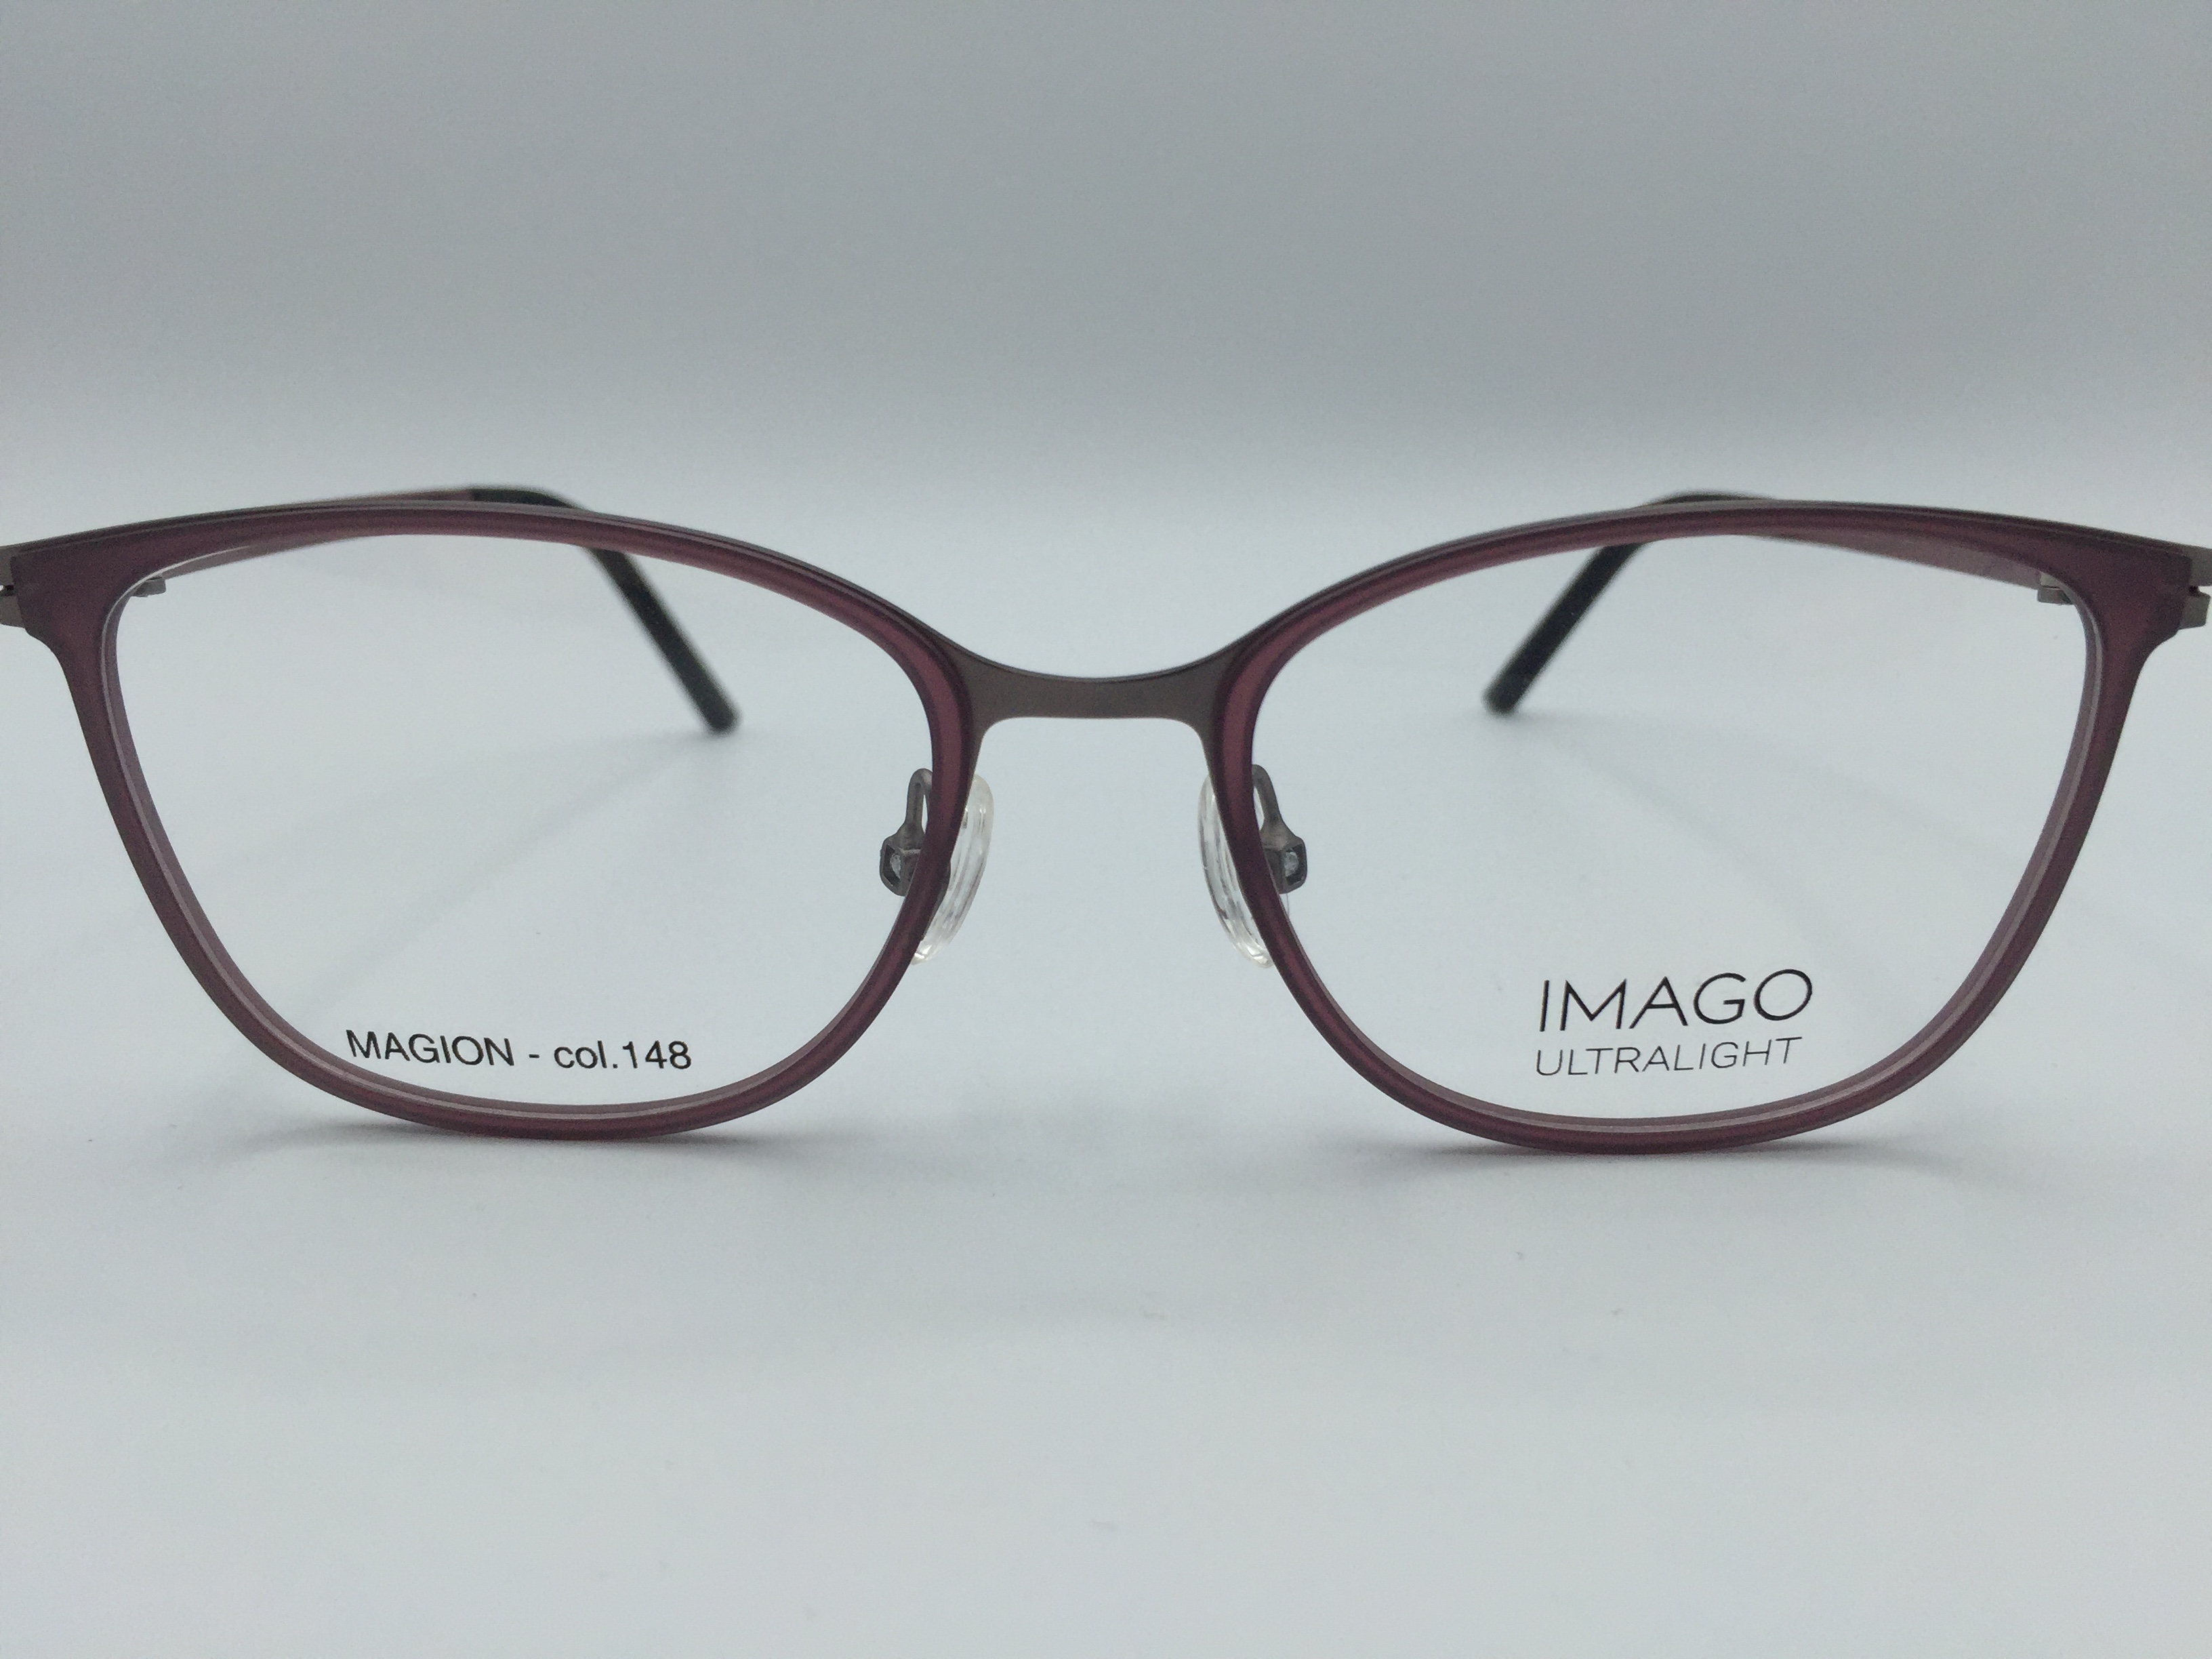 Imago Ultralight Magion 148